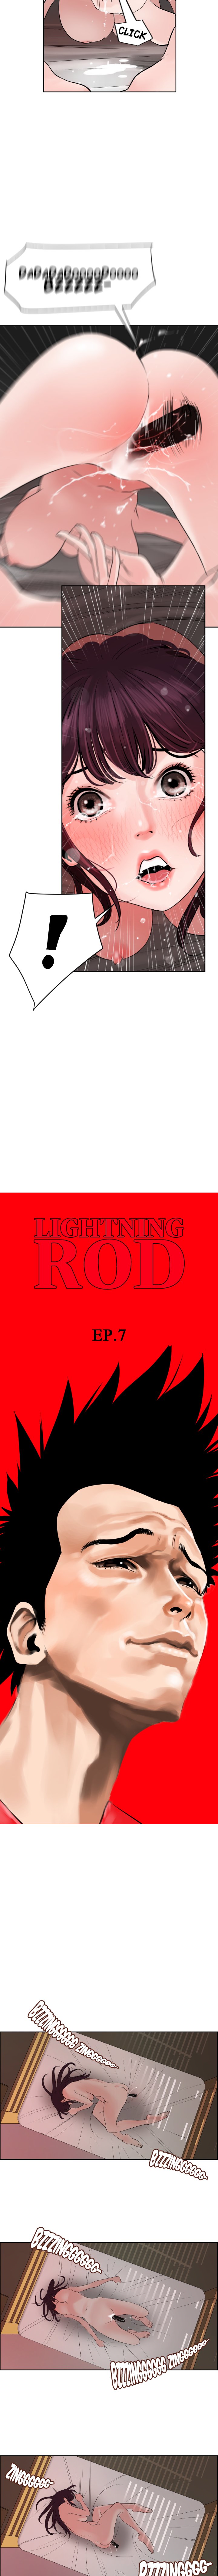 Lightning Rod image